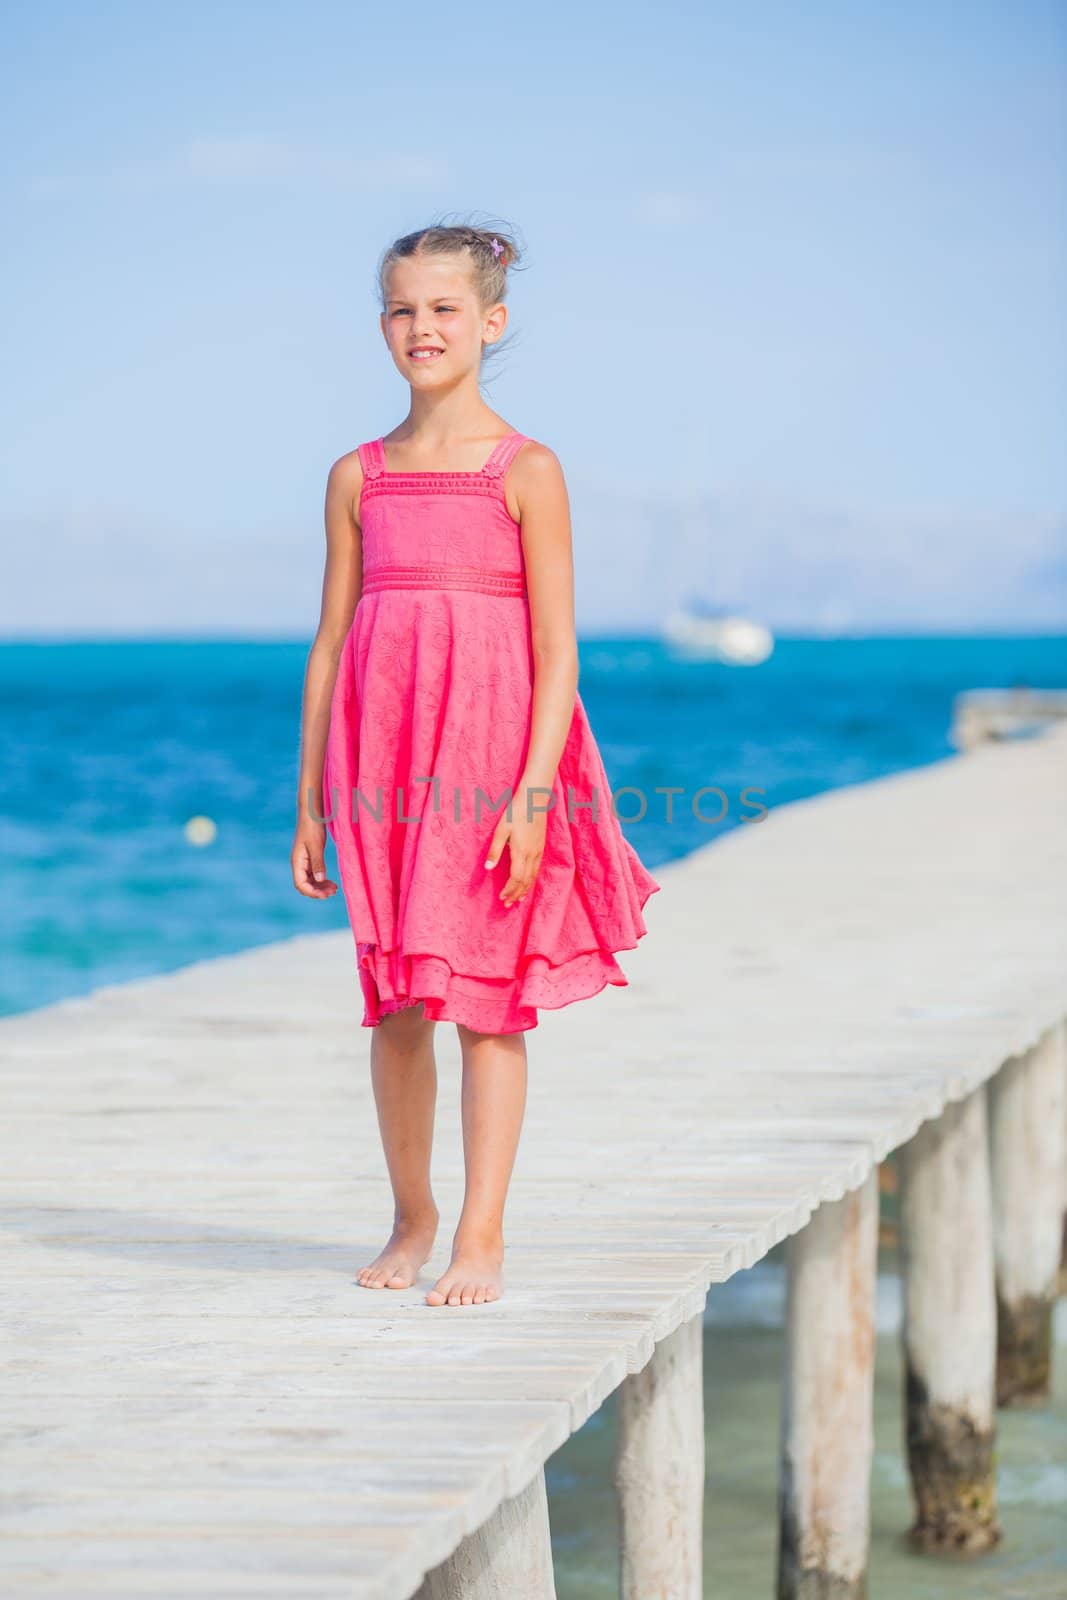 Girl walking on jetty by maxoliki